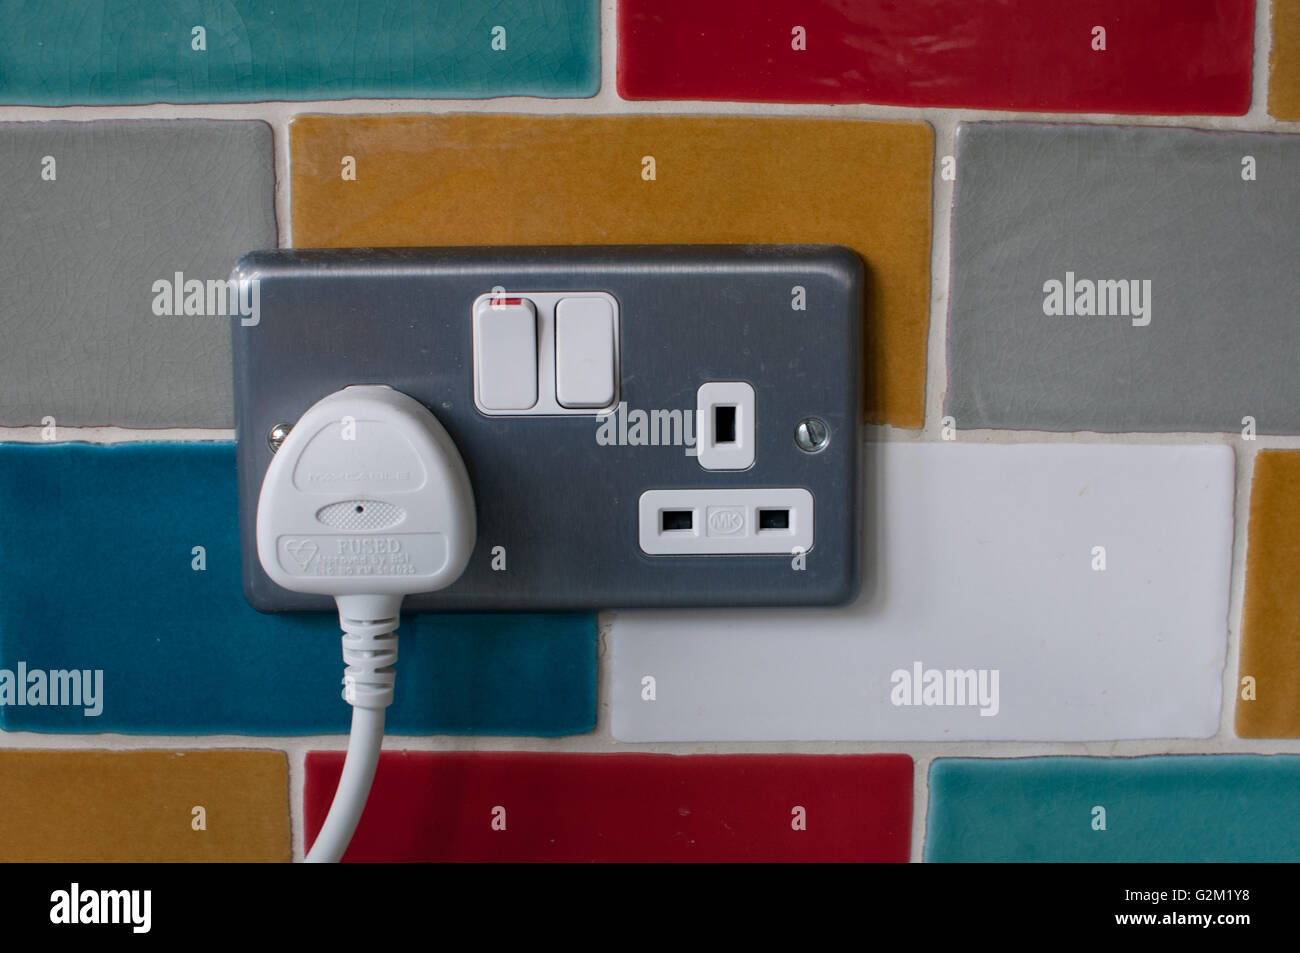 plug and socket Stock Photo